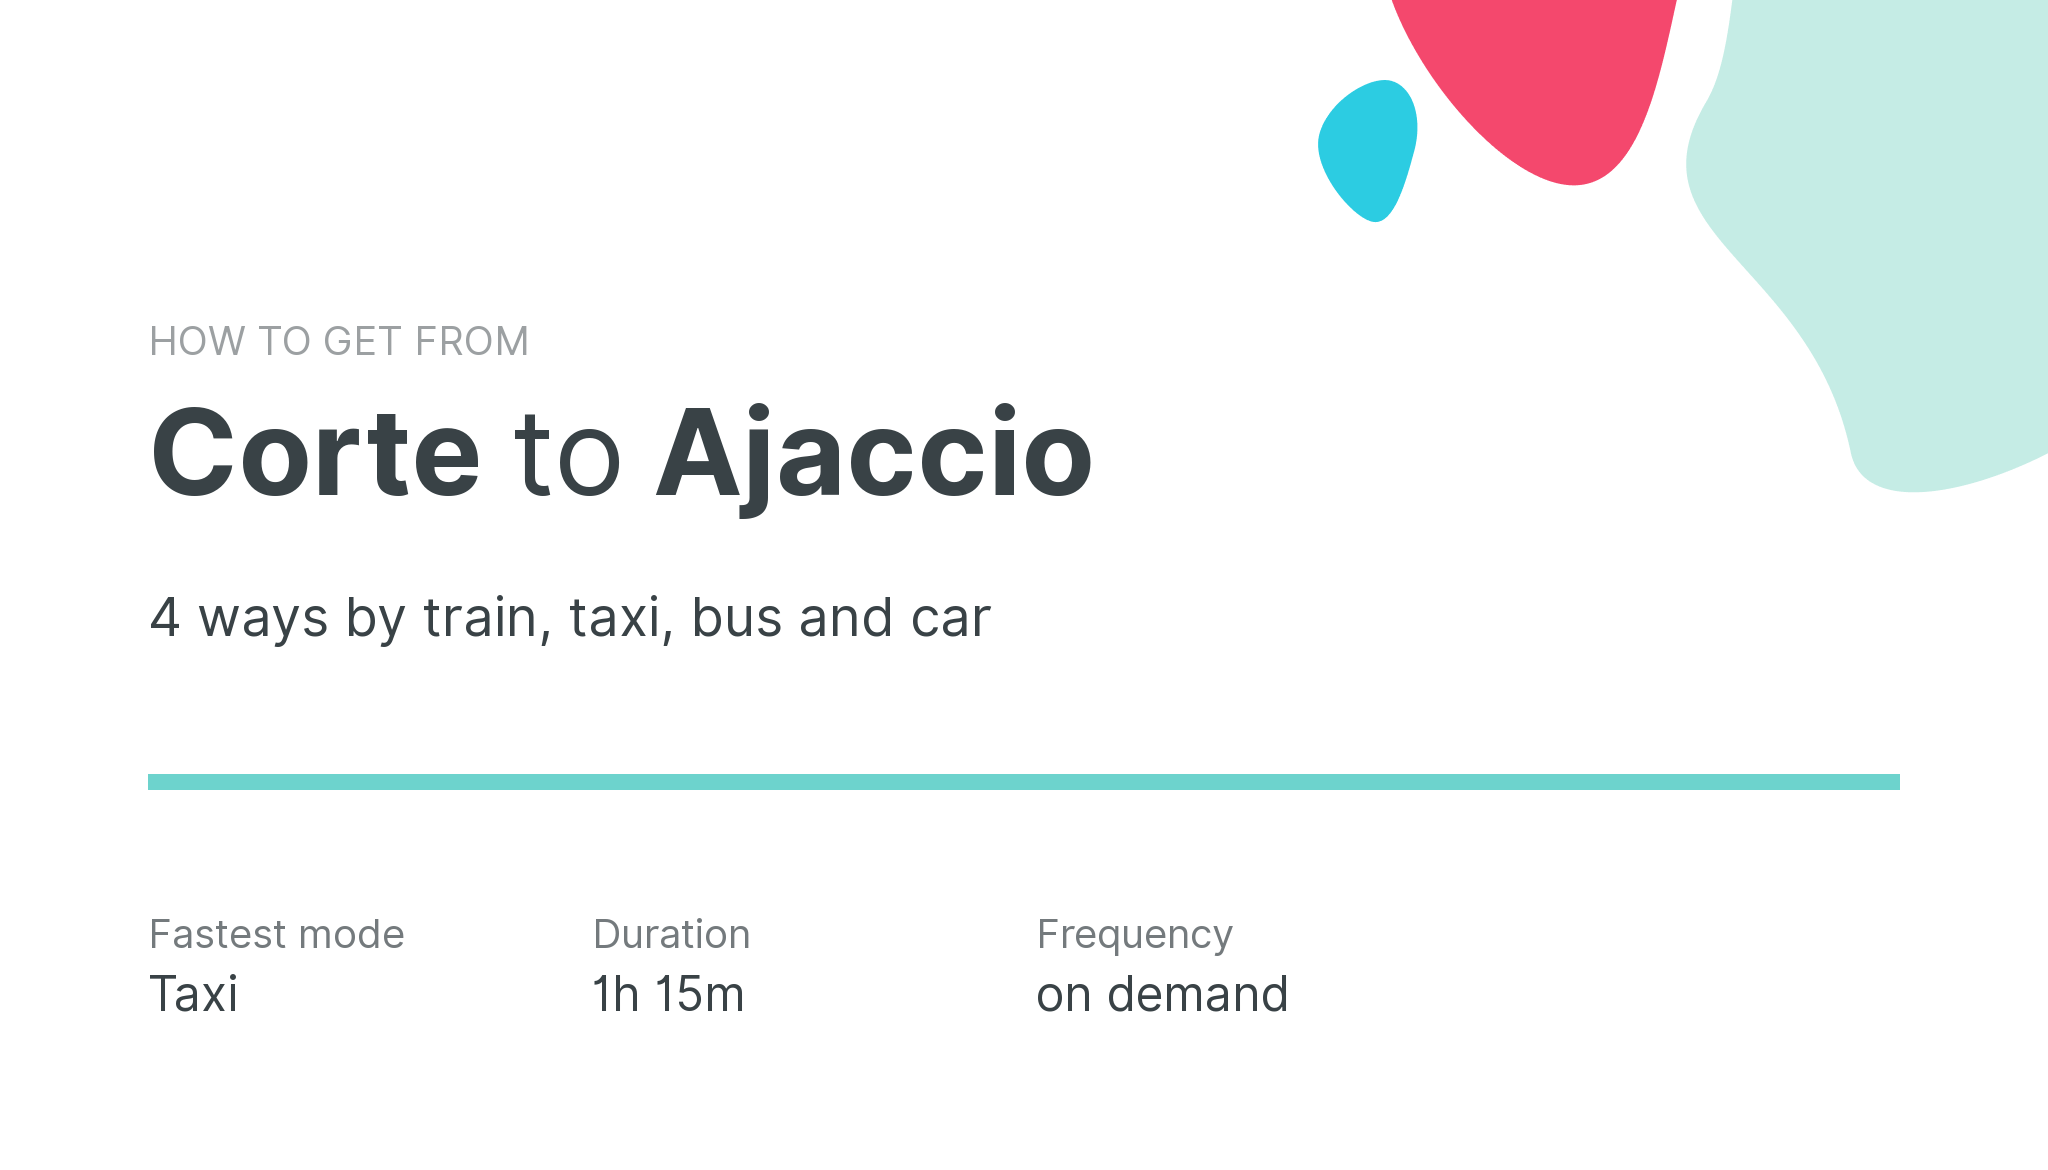 How do I get from Corte to Ajaccio